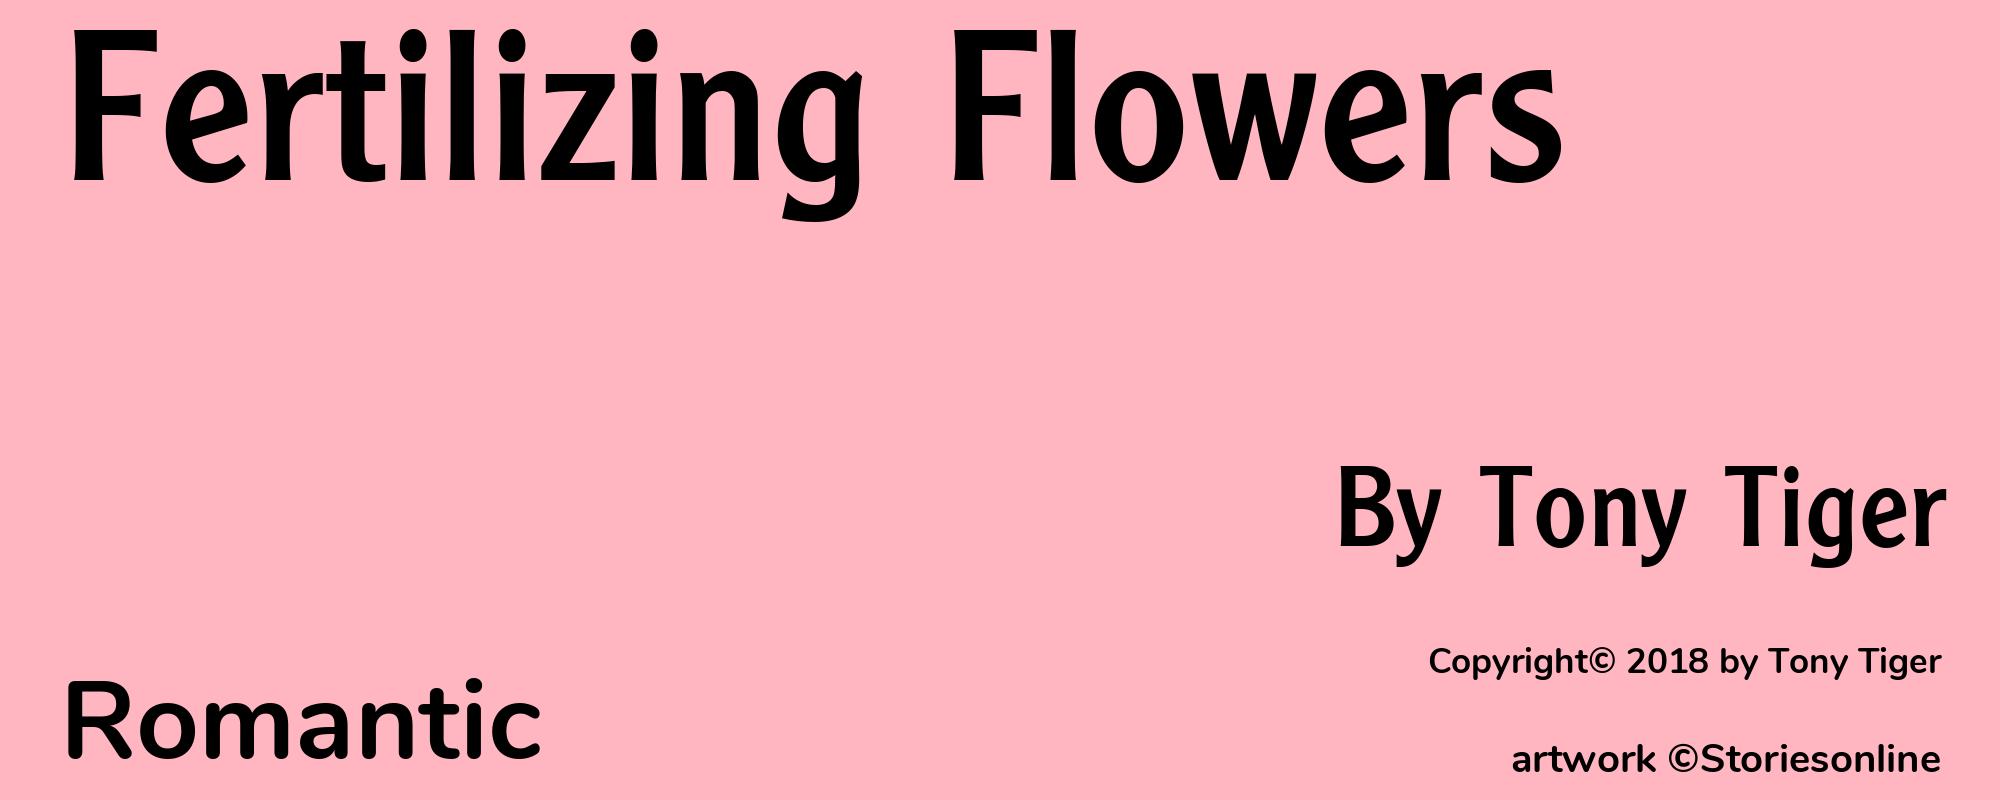 Fertilizing Flowers - Cover